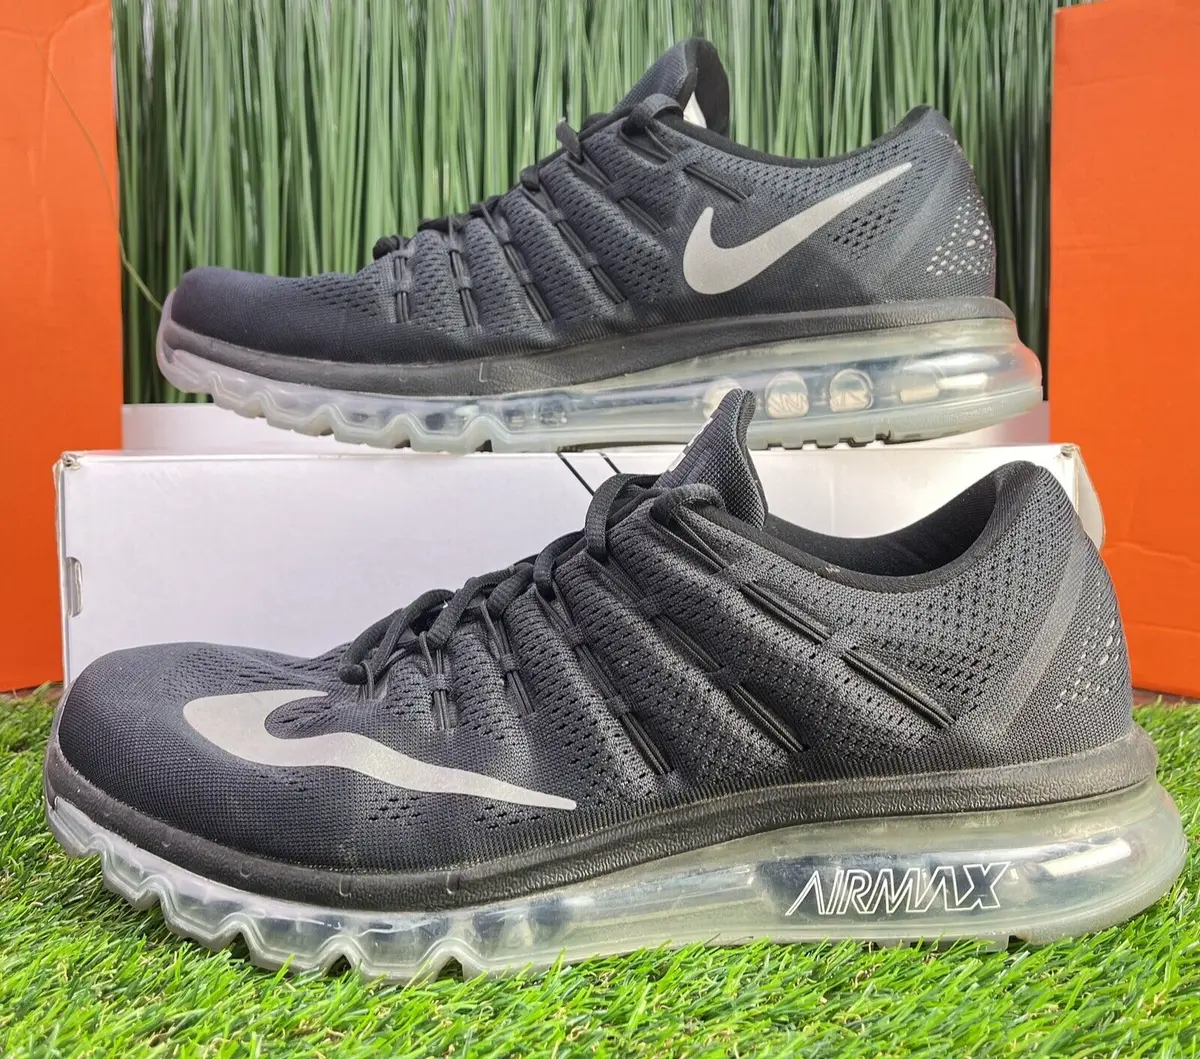 Omleiden hurken Verrast Nike Air Max 2016 Mens Running Shoes Black White Dark Grey 806771-001 Size  11.5 | eBay